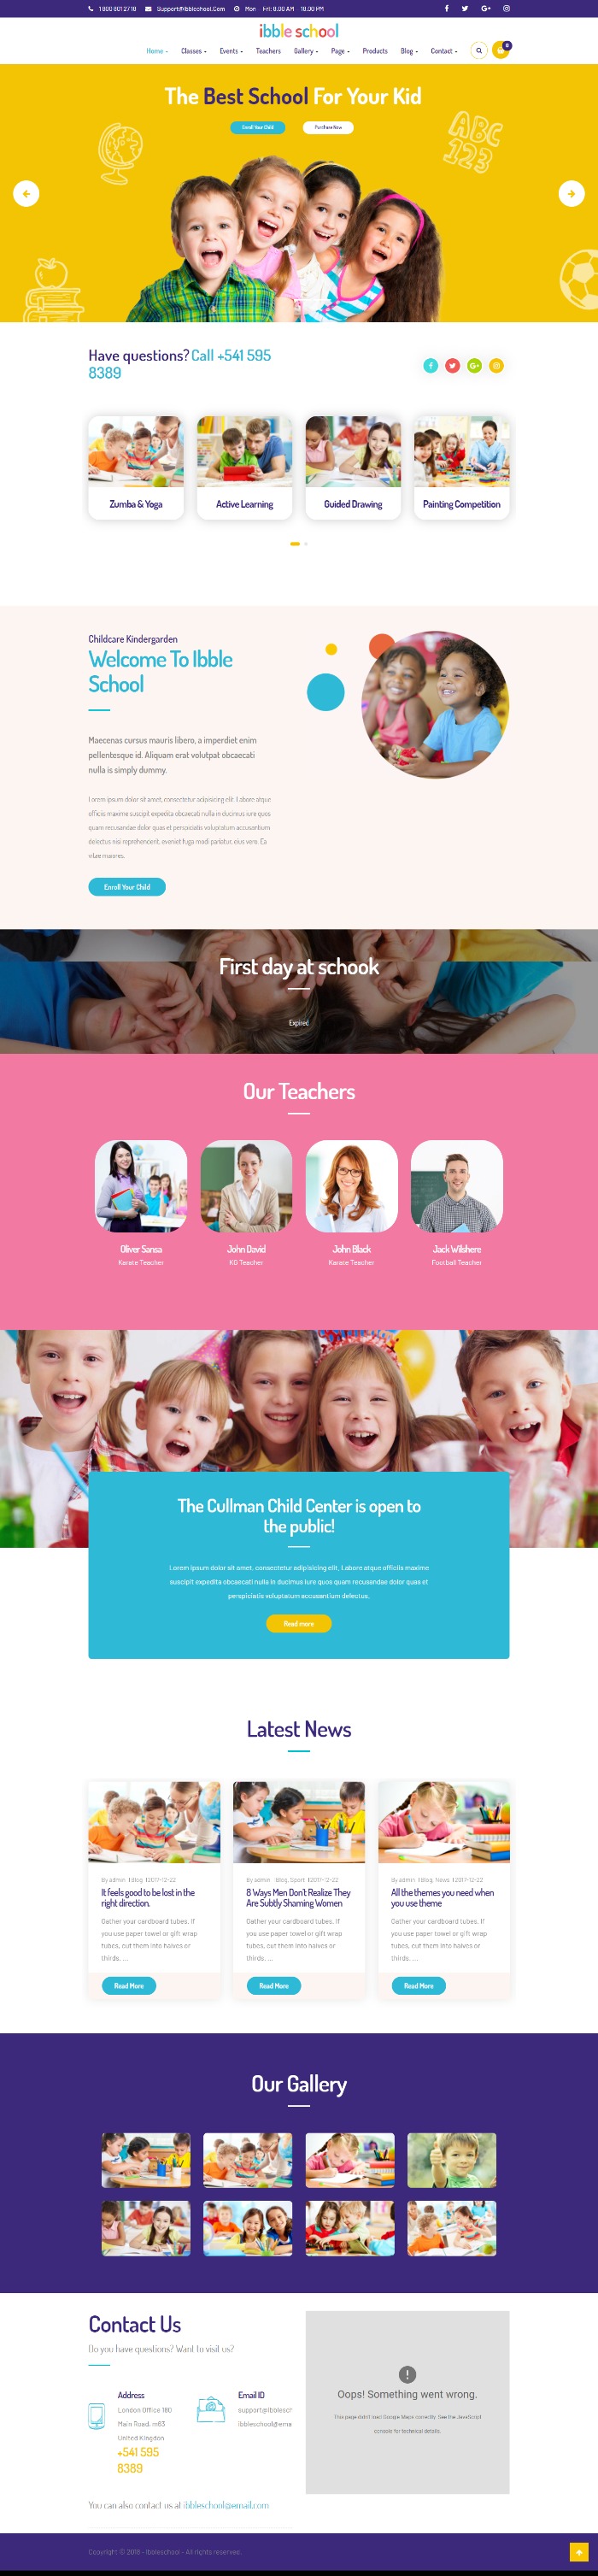 Mẫu website giáo dục - IBBLE SCHOOL